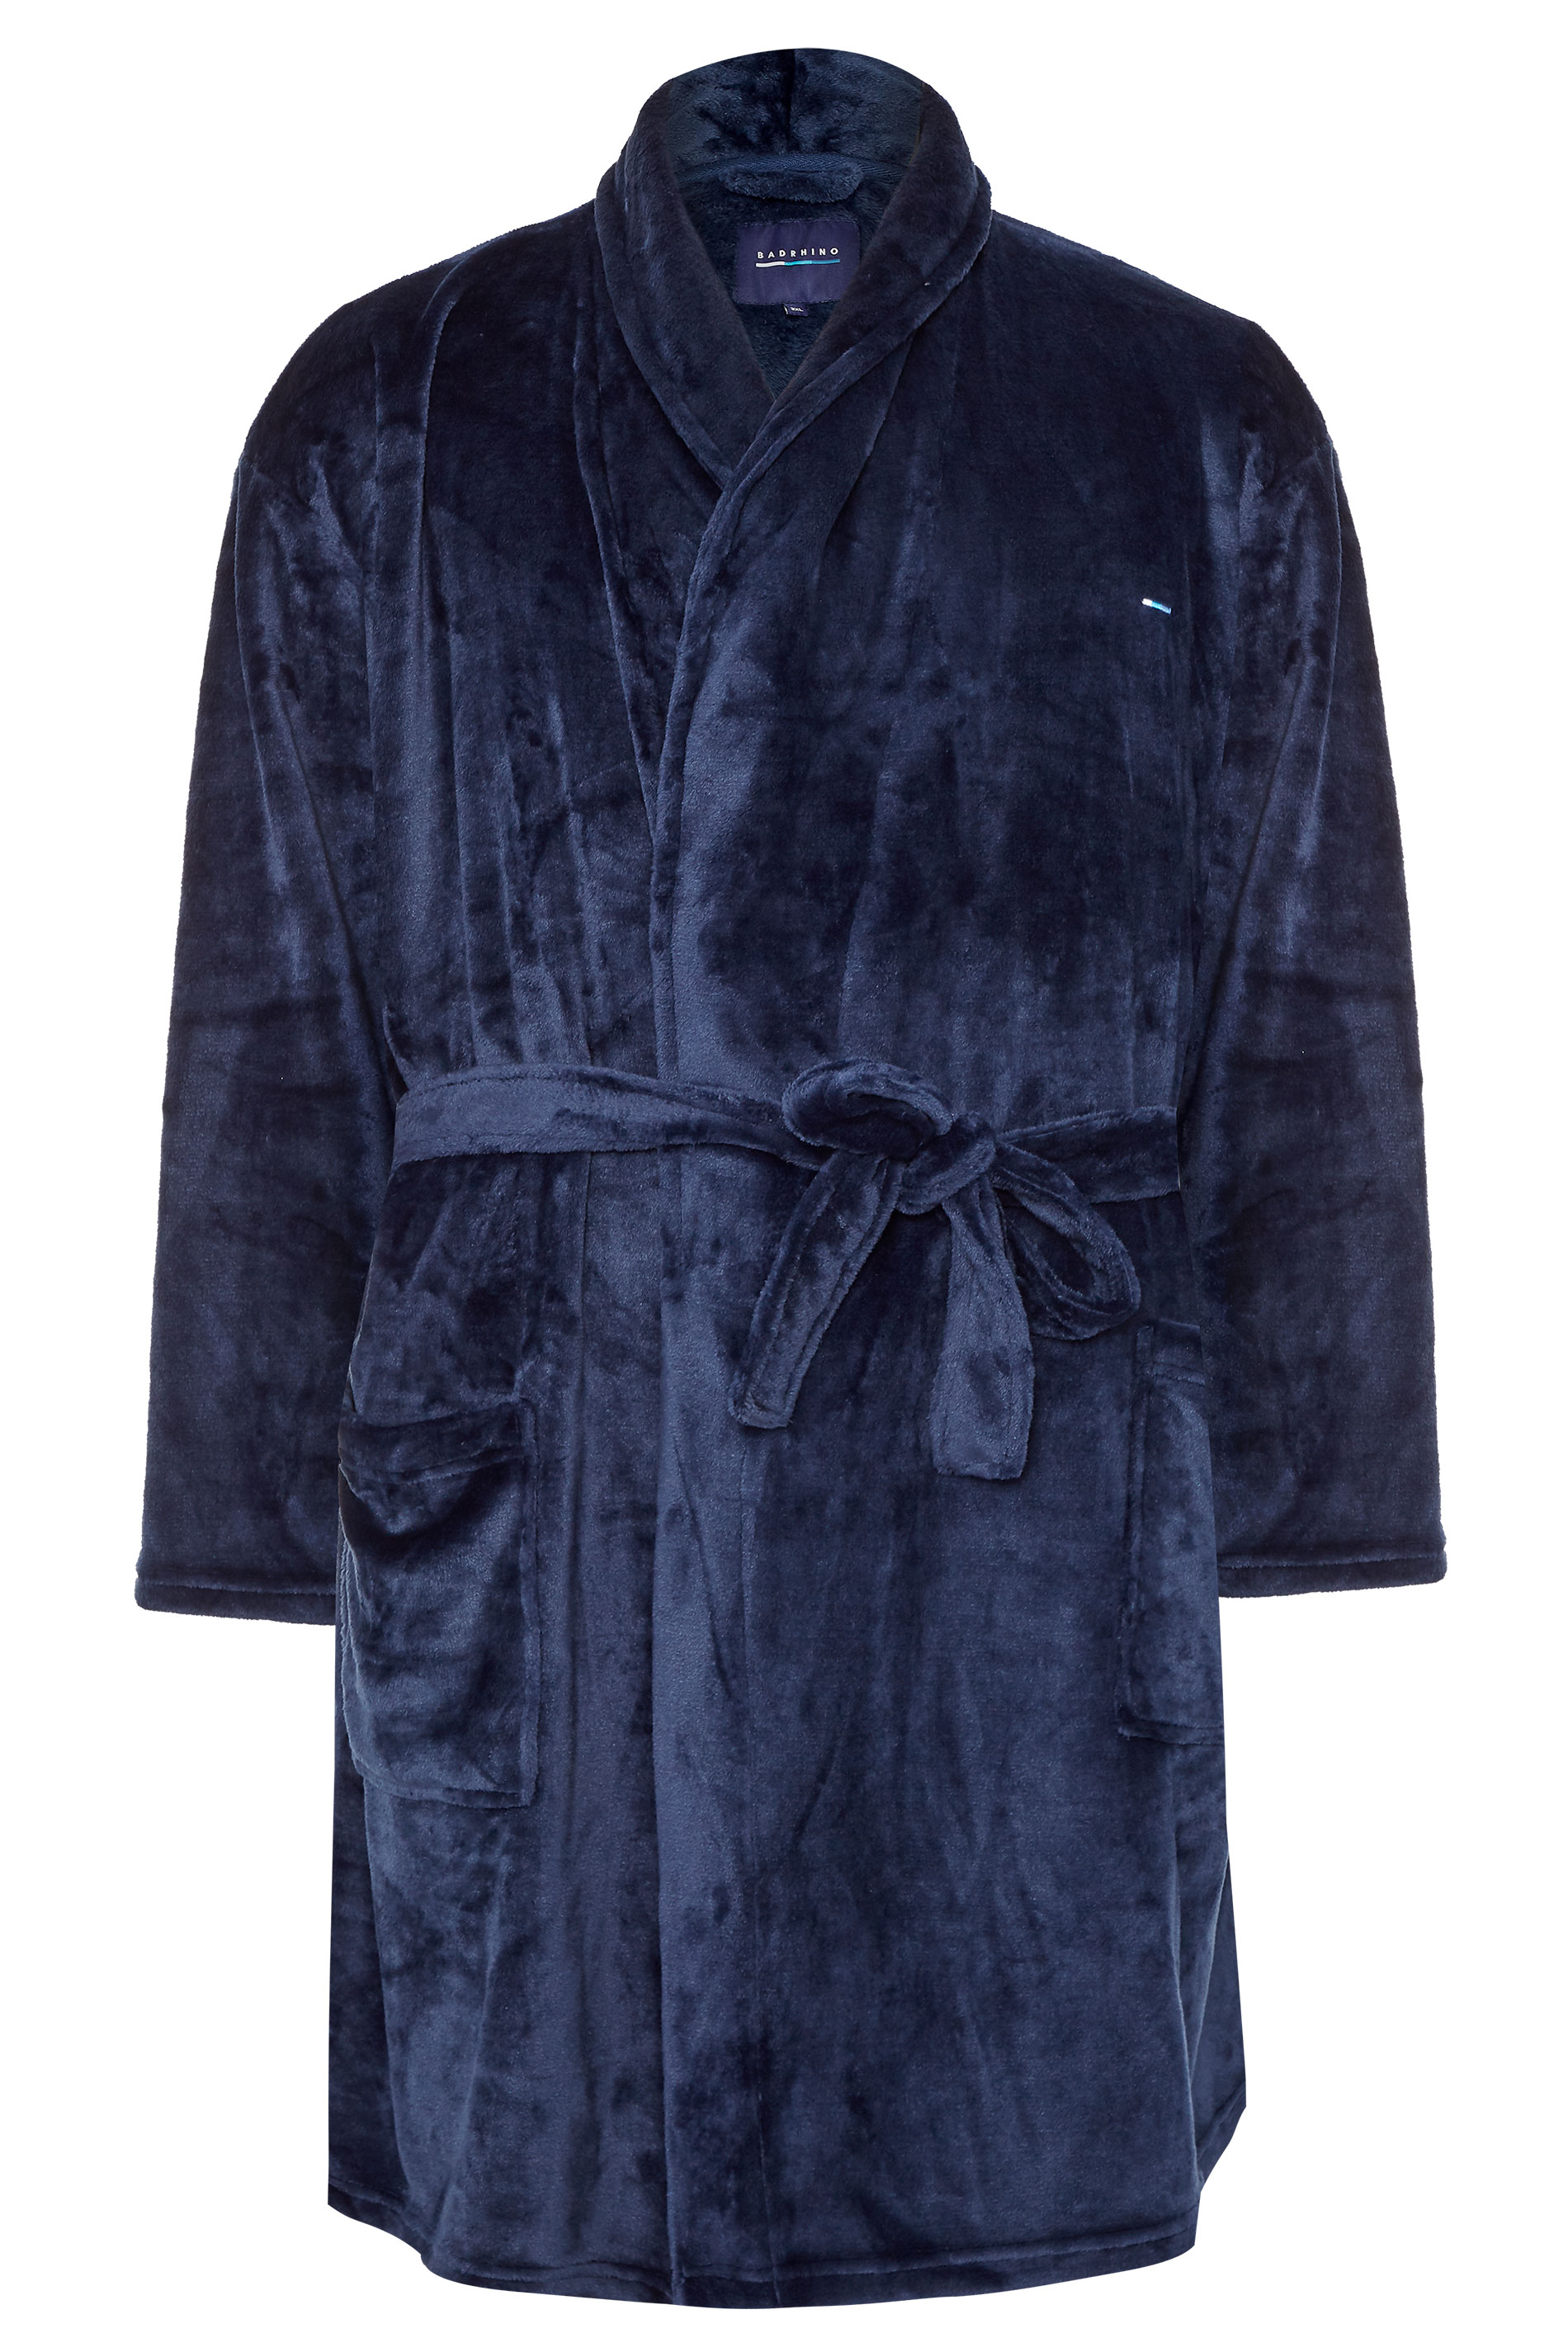 Regular Size 4XL Hooded Sleepwear & Robes for Men for sale | eBay